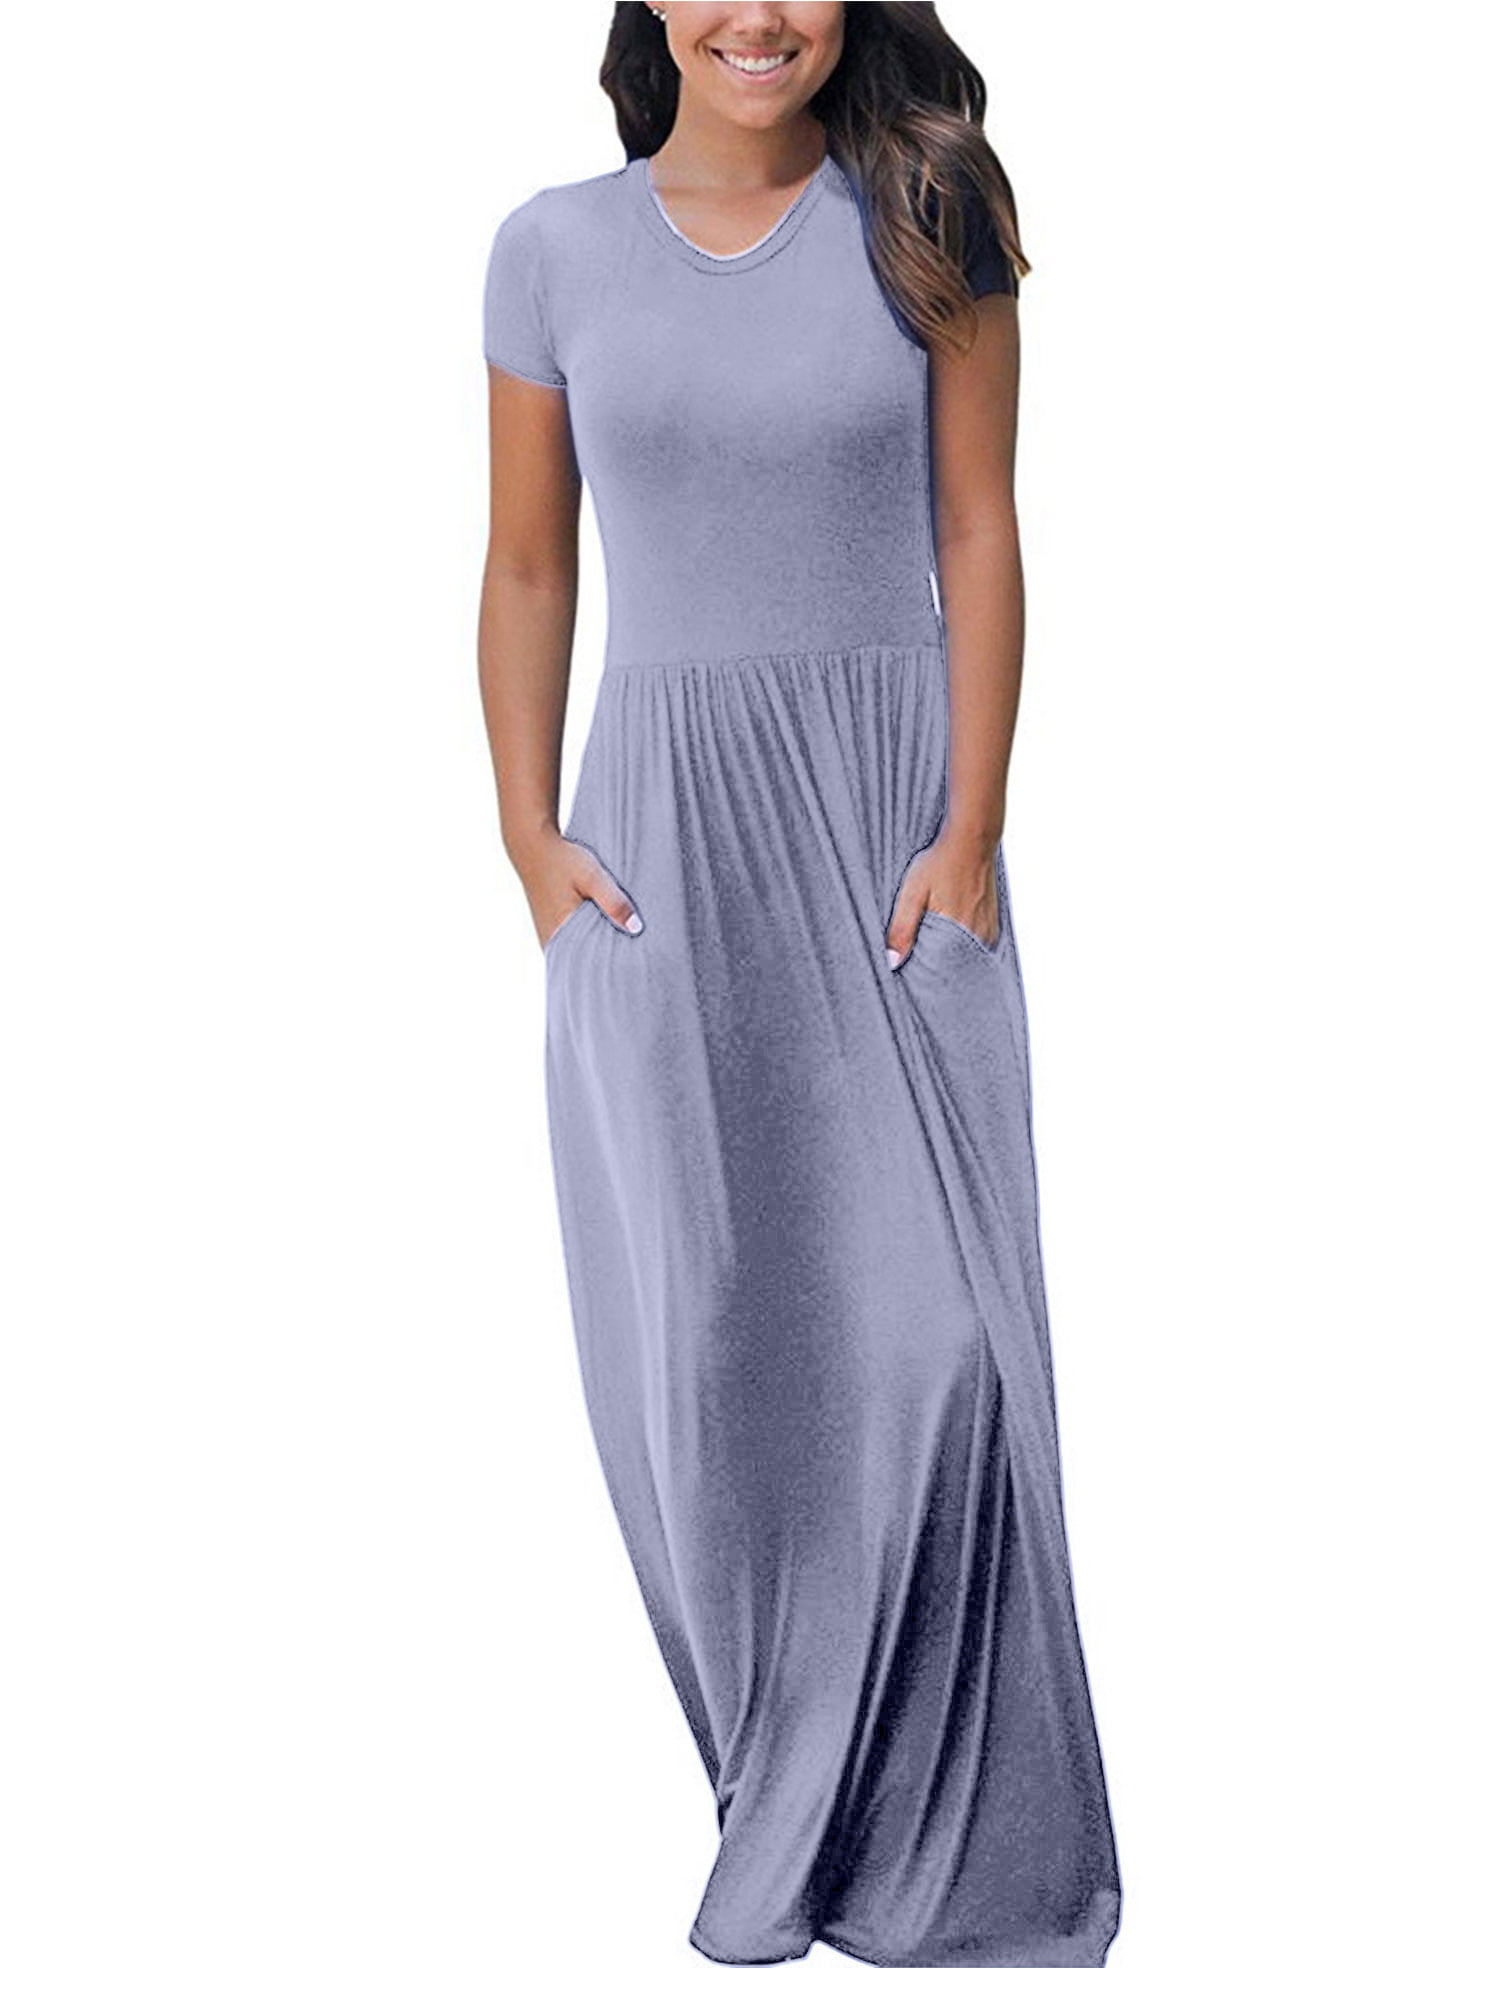 KEDUDES - Women Long Maxi Dress Casual Plus Size Fashion Dresses Baggy ...